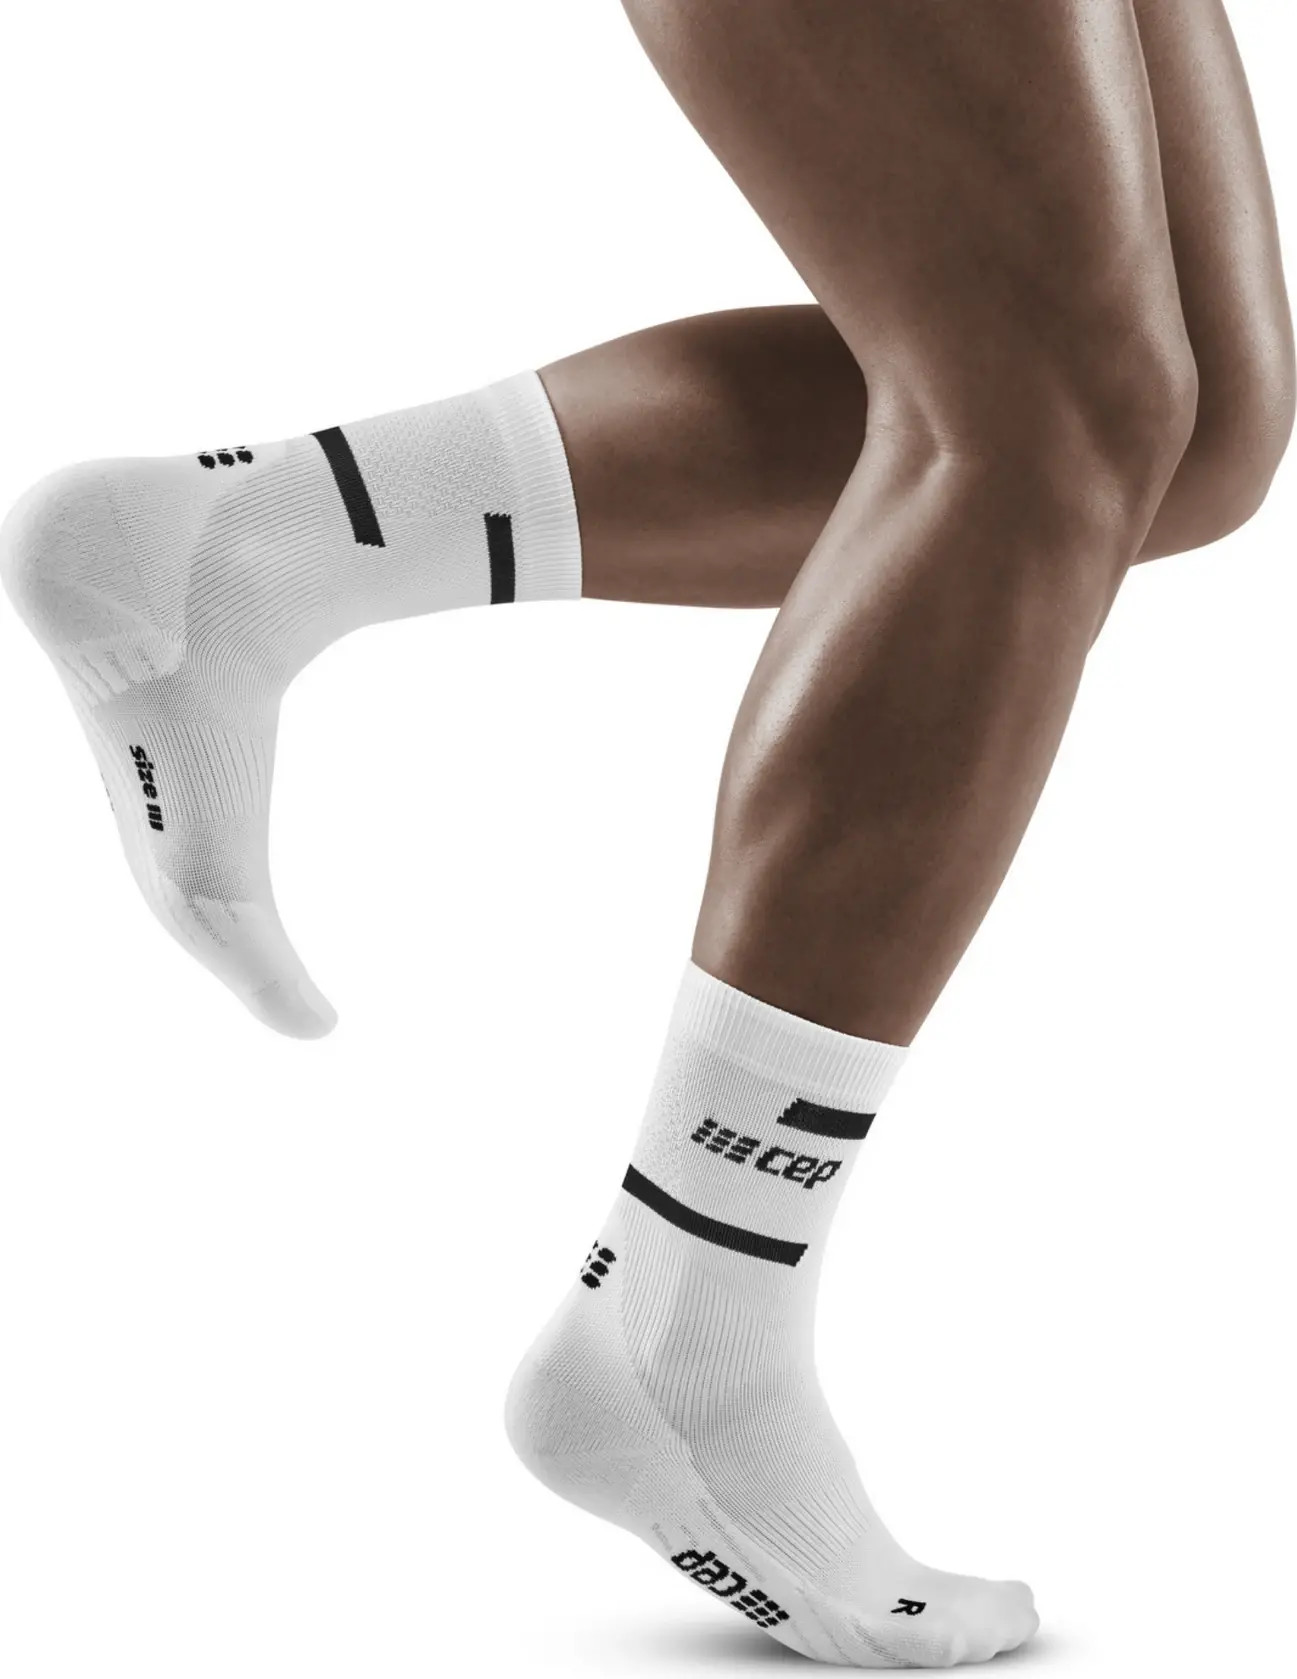 https://www.fjellsport.no/assets/blobs/cep-sports-men-s-the-run-socks-mid-cut-white-9ac9e359c7.jpeg